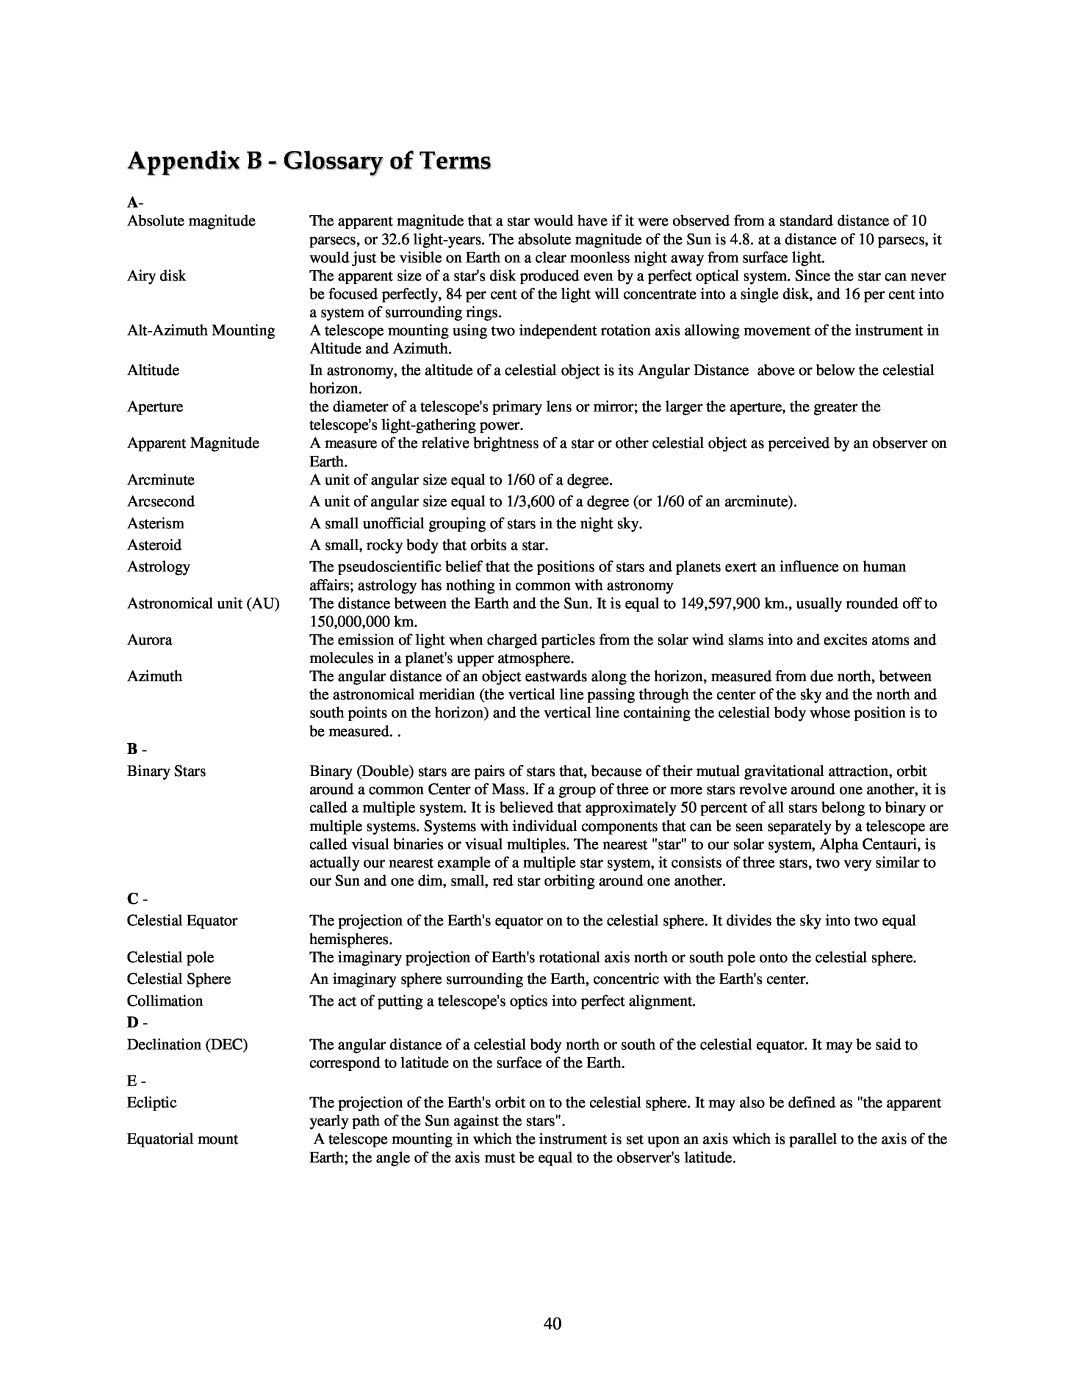 Celestron NexStar HC manual Appendix B - Glossary of Terms 